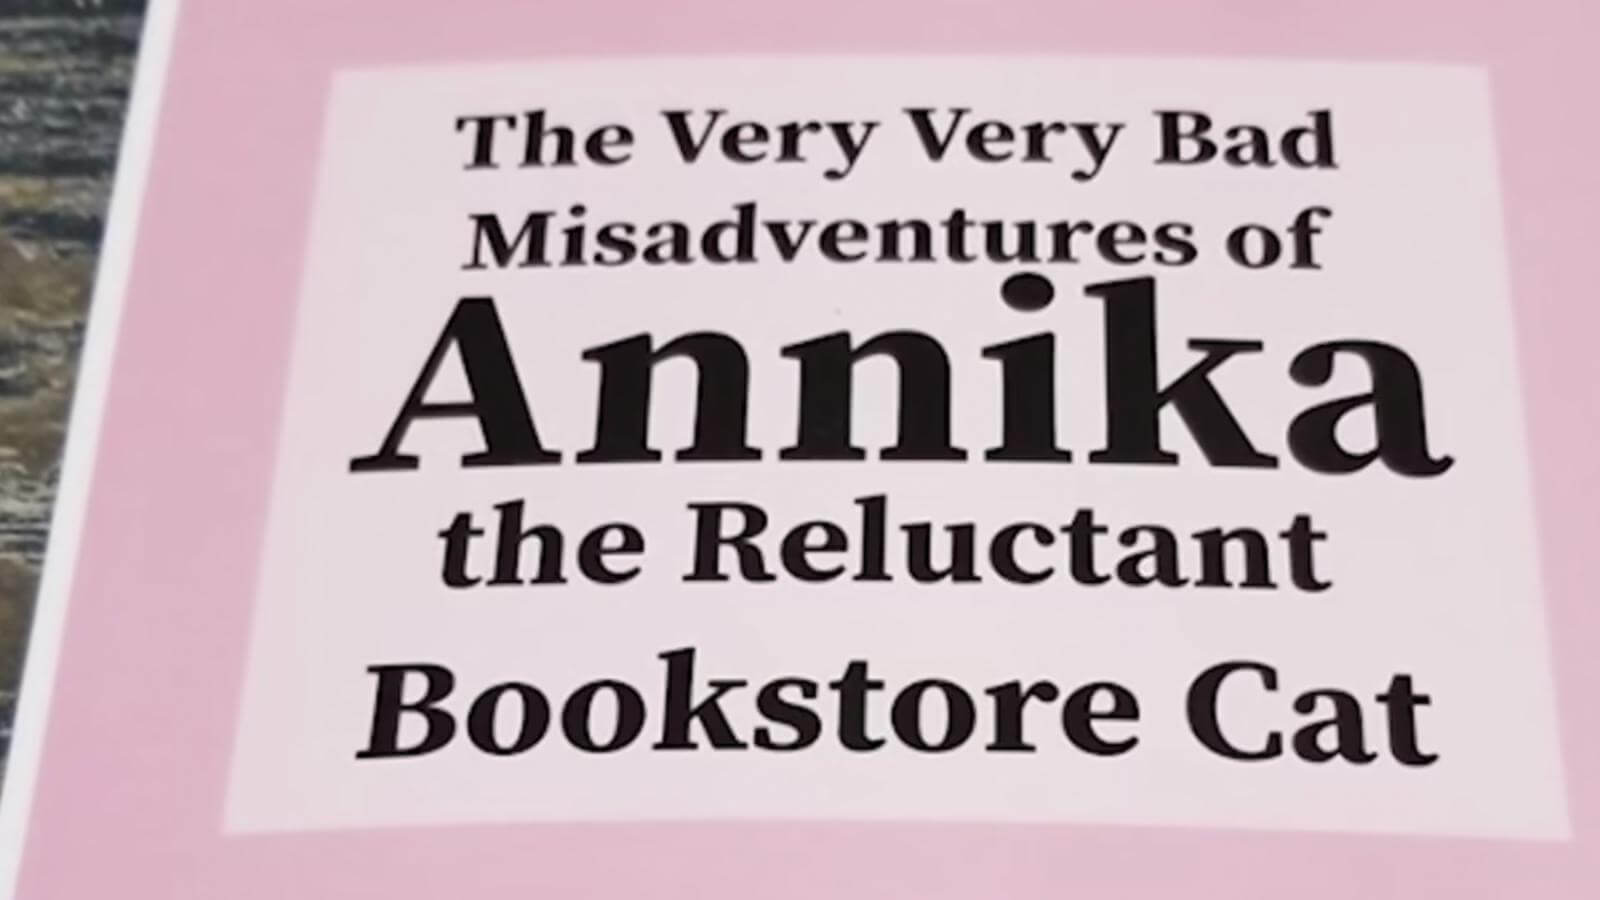 Let’s make Annika’s book a bestseller. Cupboard Maker Books